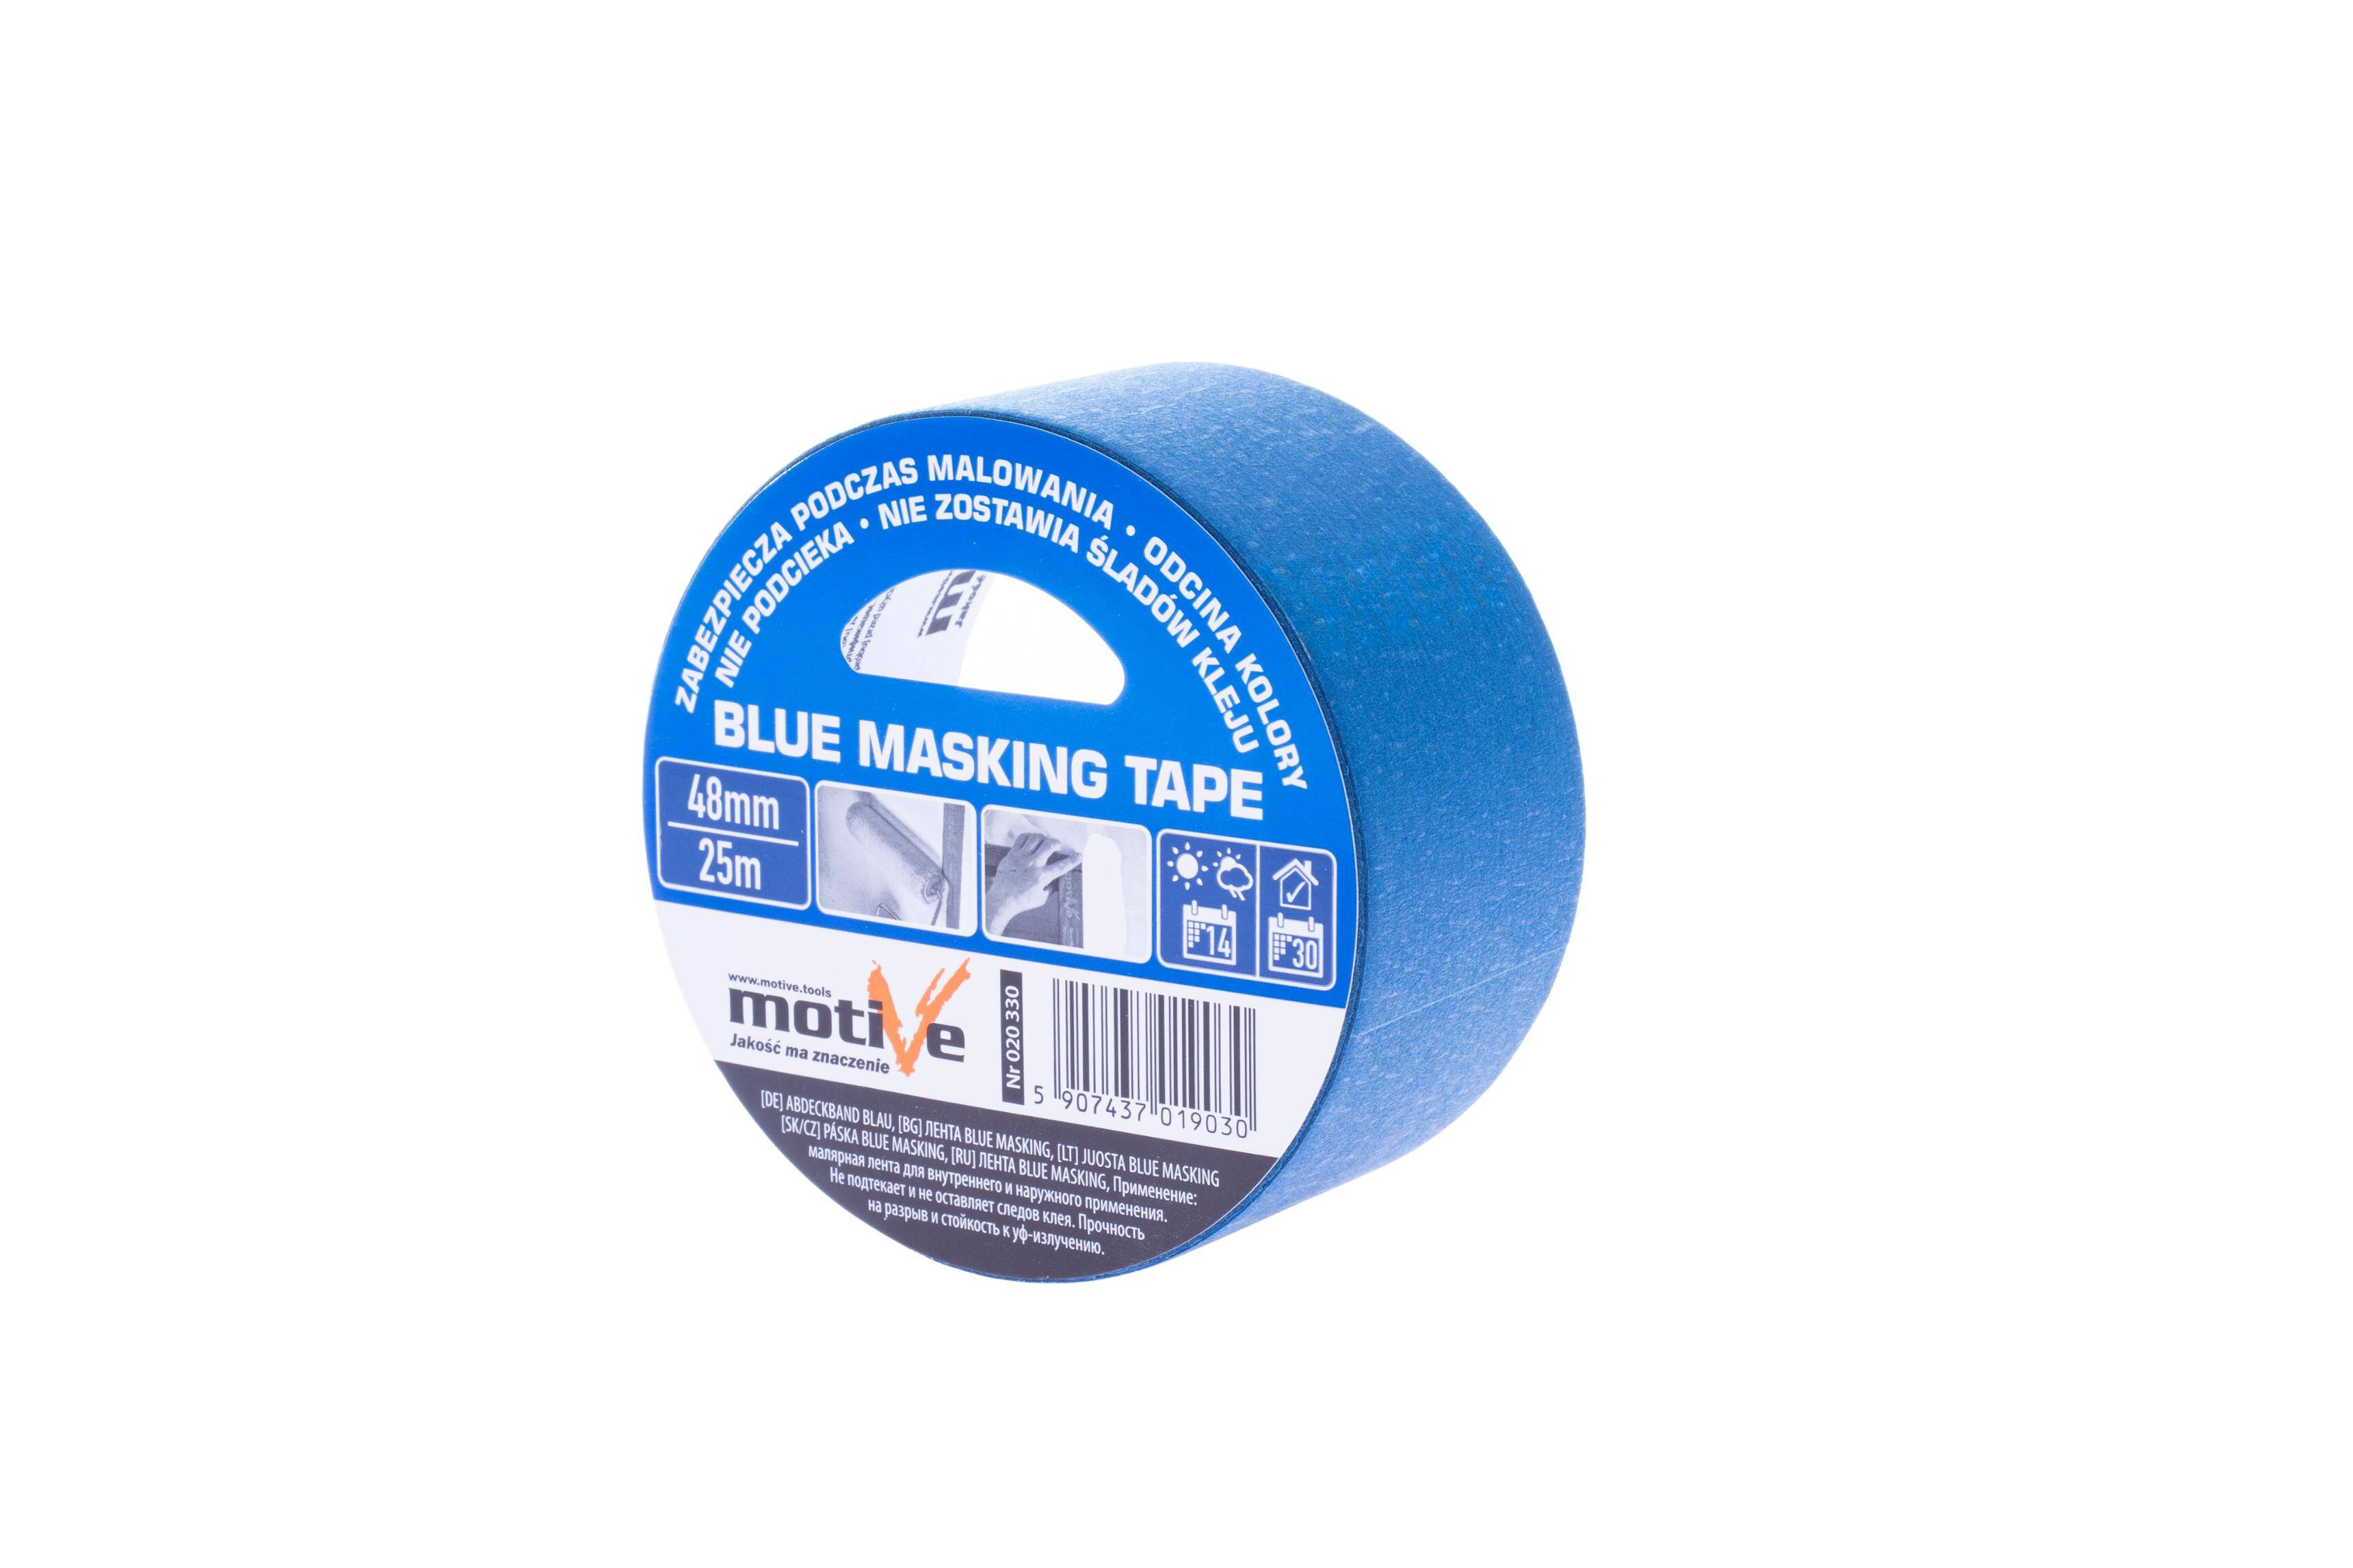 Blue masking tape 48mm/25m